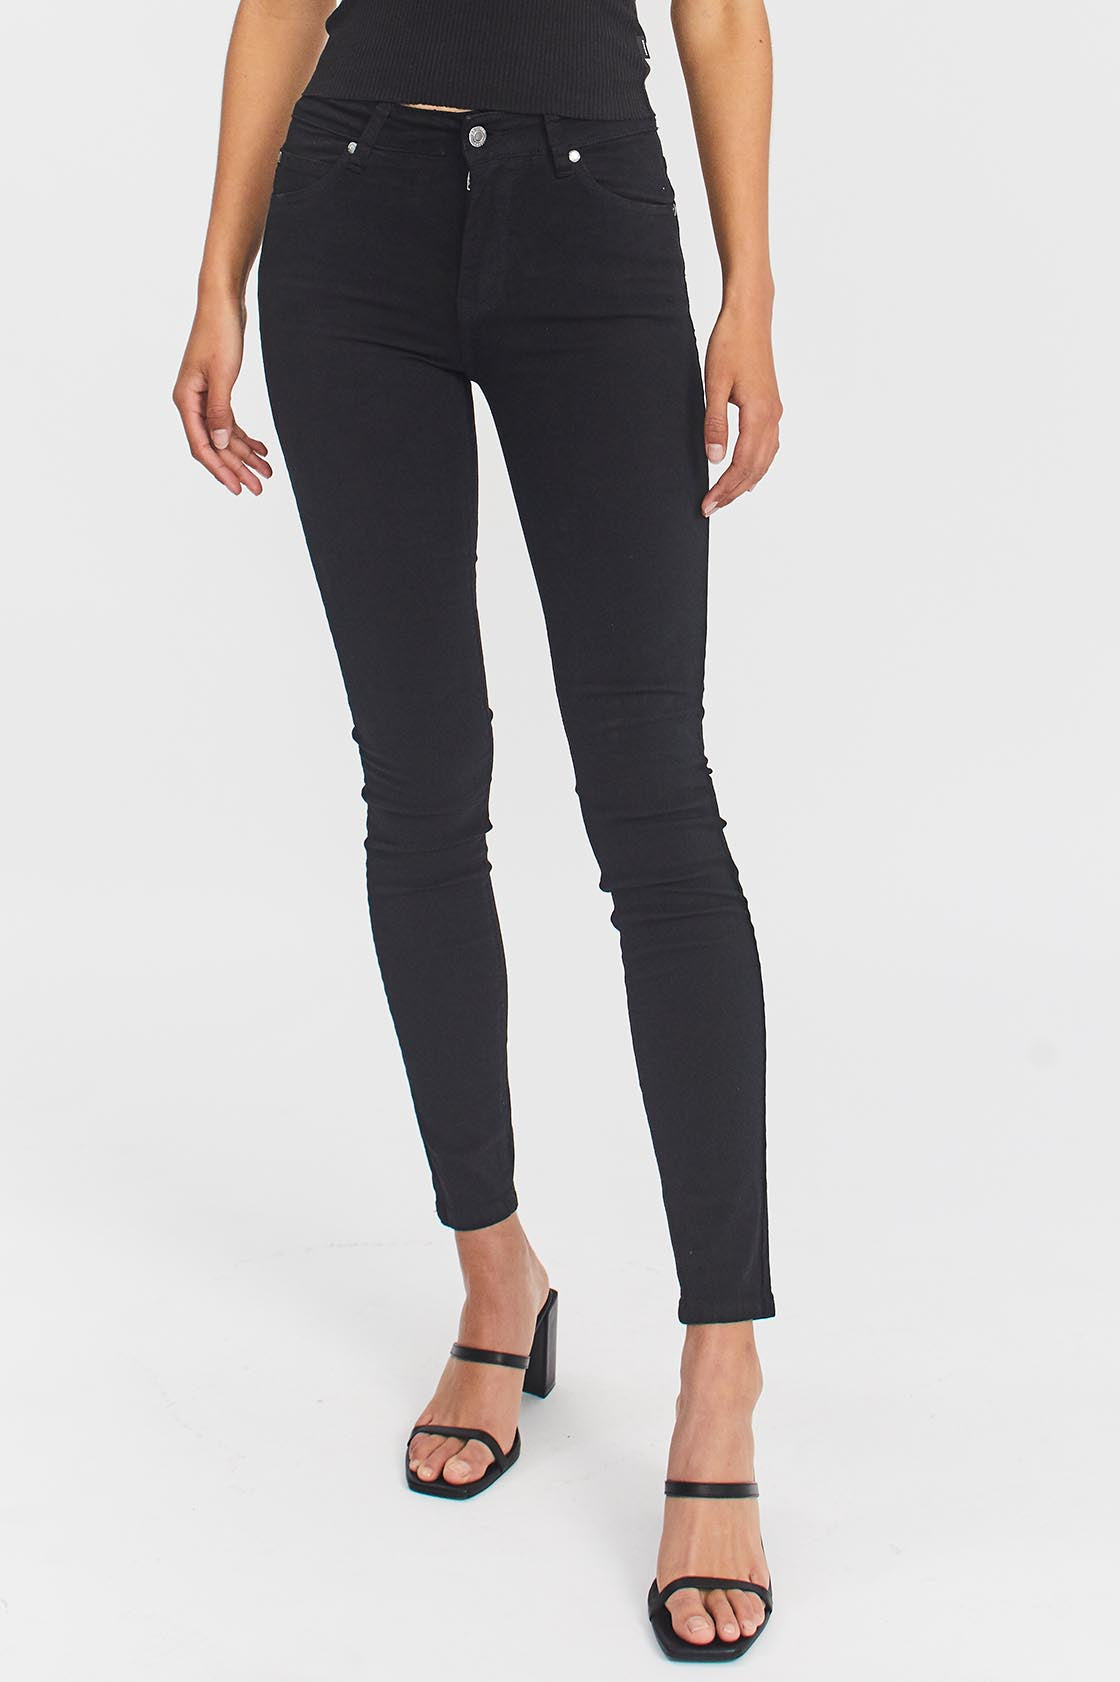 Regina Jeans Black - Final Sale – Dr Denim Jeans - Australia & NZ